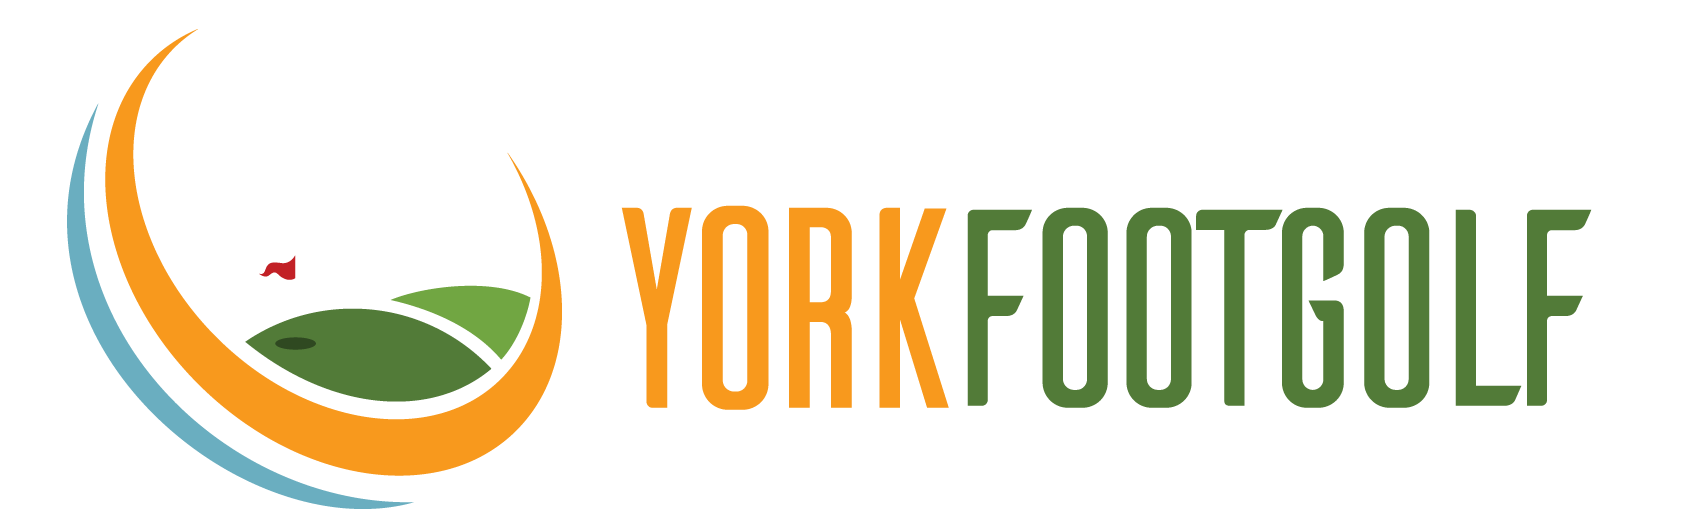 York FootGolf